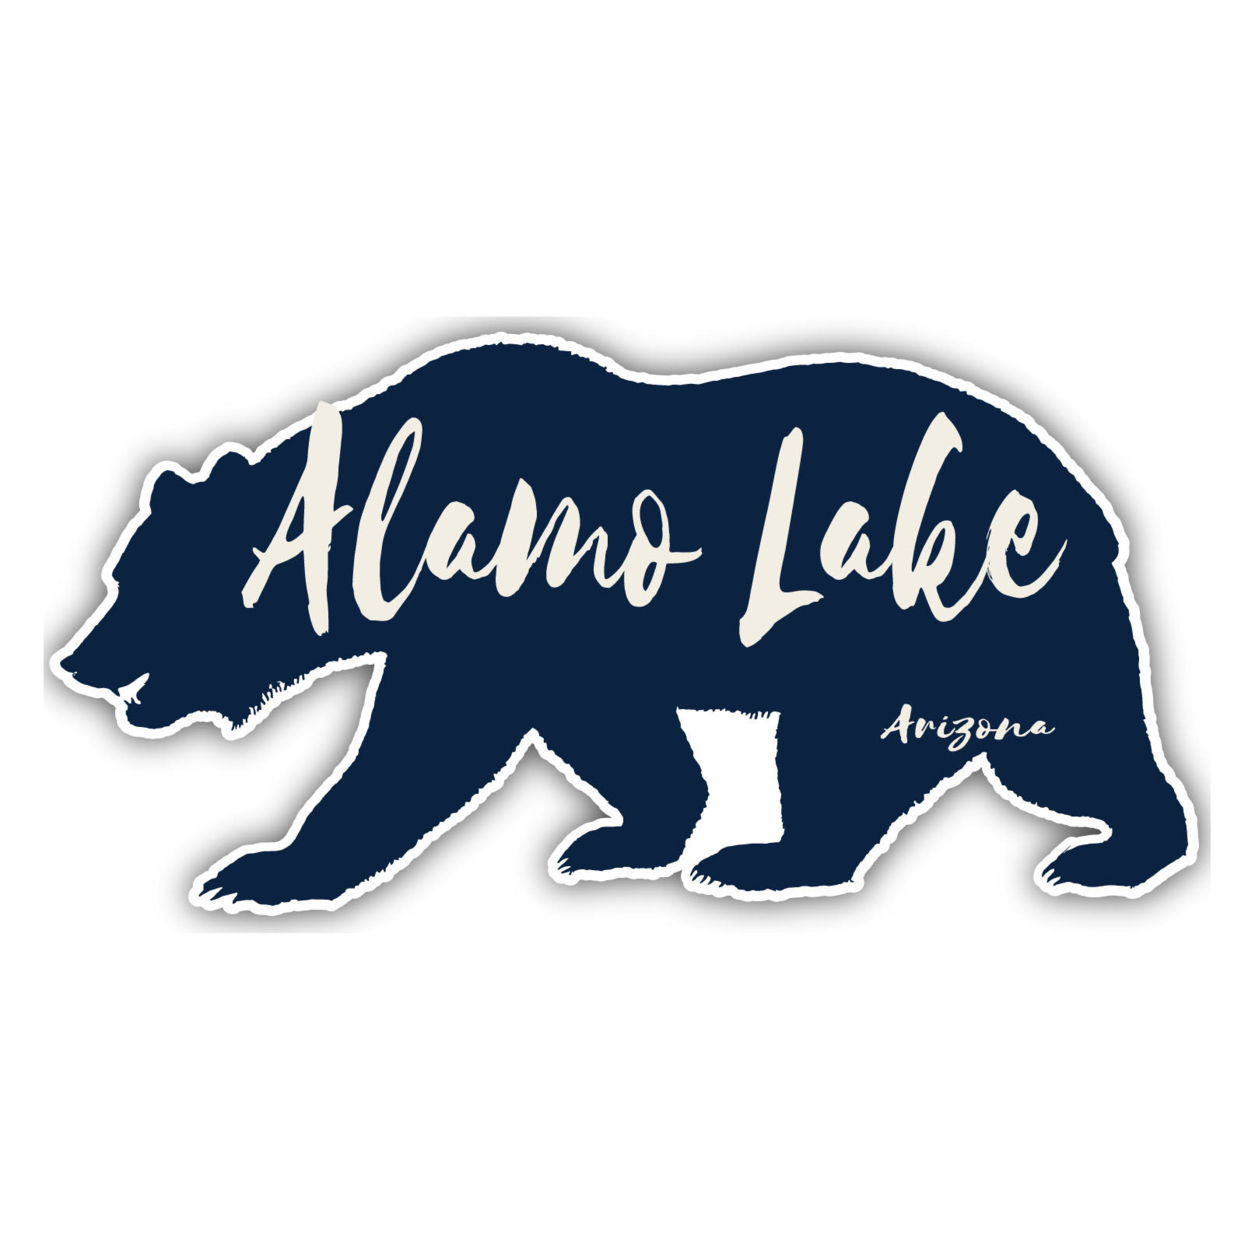 Alamo Lake Arizona Souvenir Decorative Stickers (Choose Theme And Size) - 4-Pack, 12-Inch, Bear